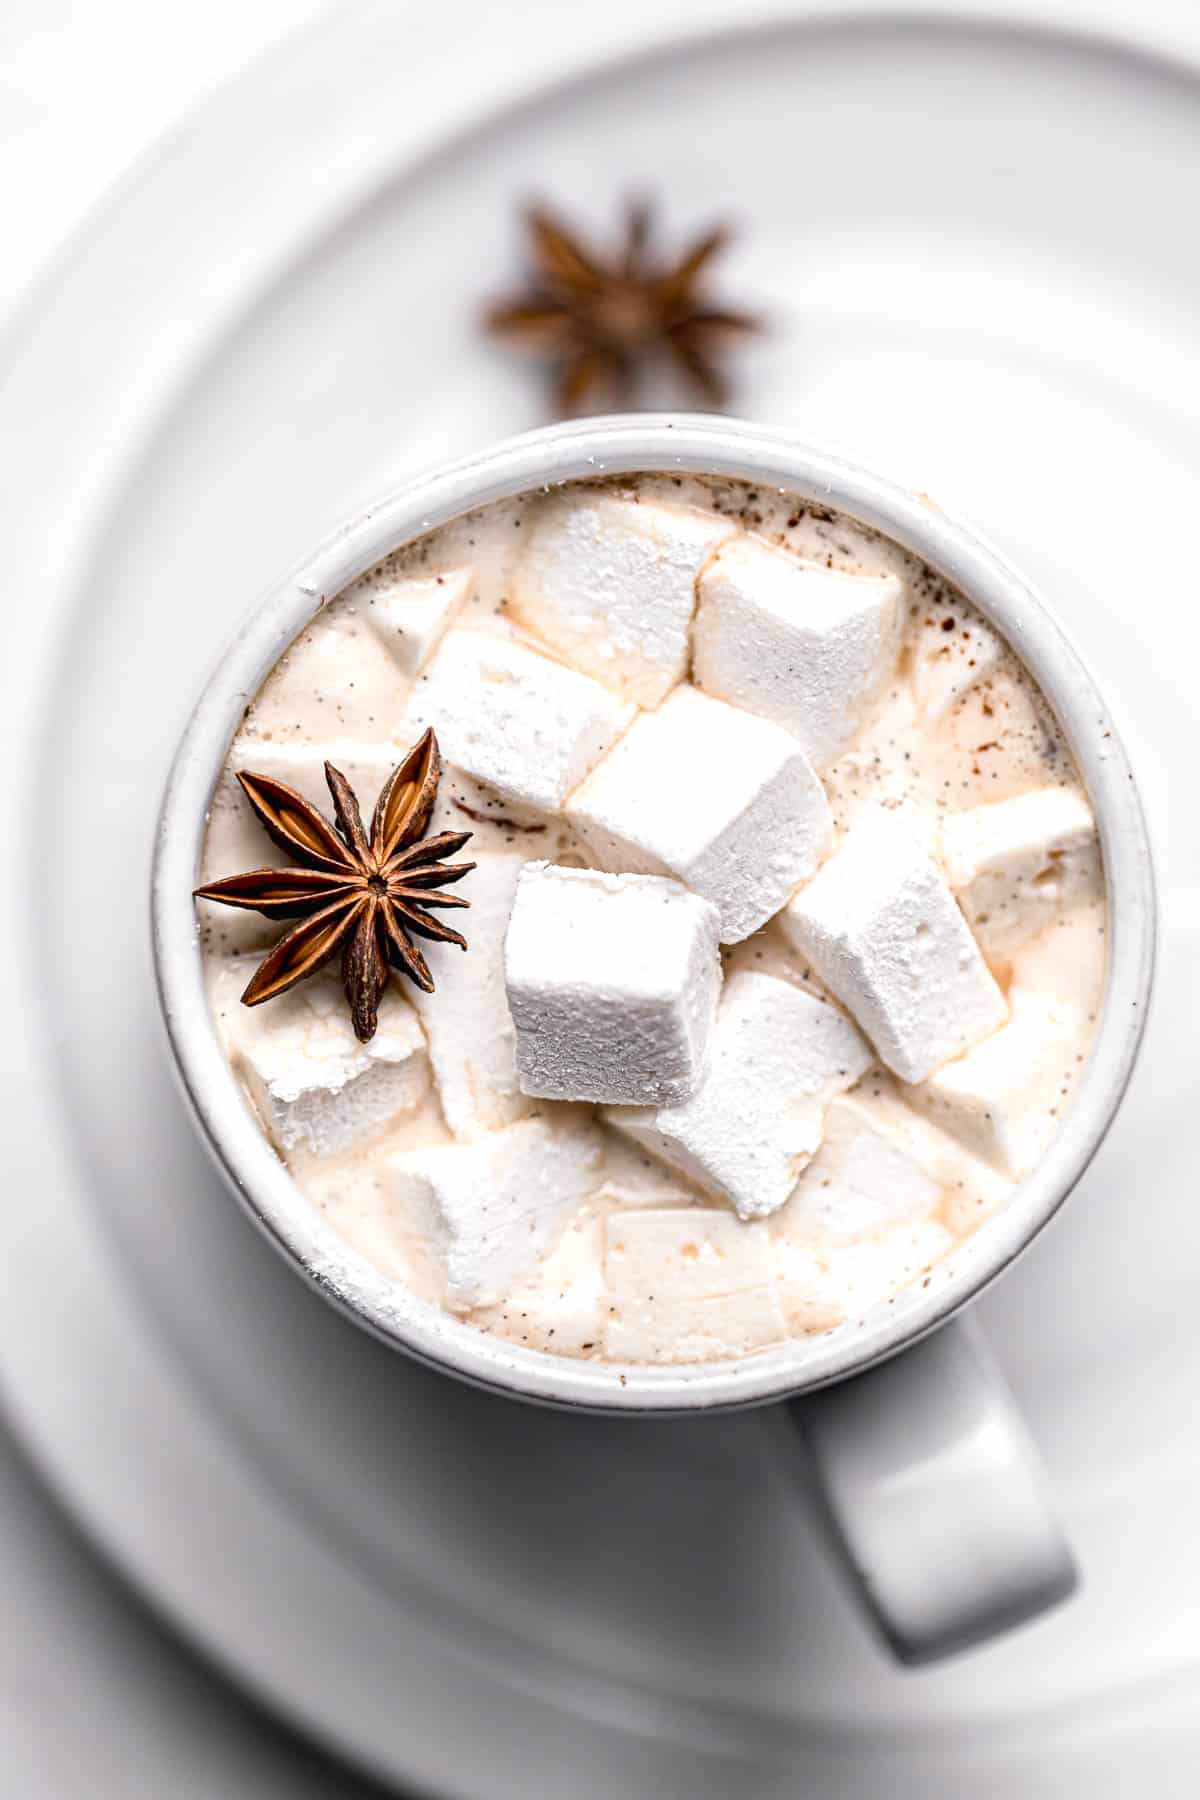 mini marshmallows in a mug of hot chocolate.